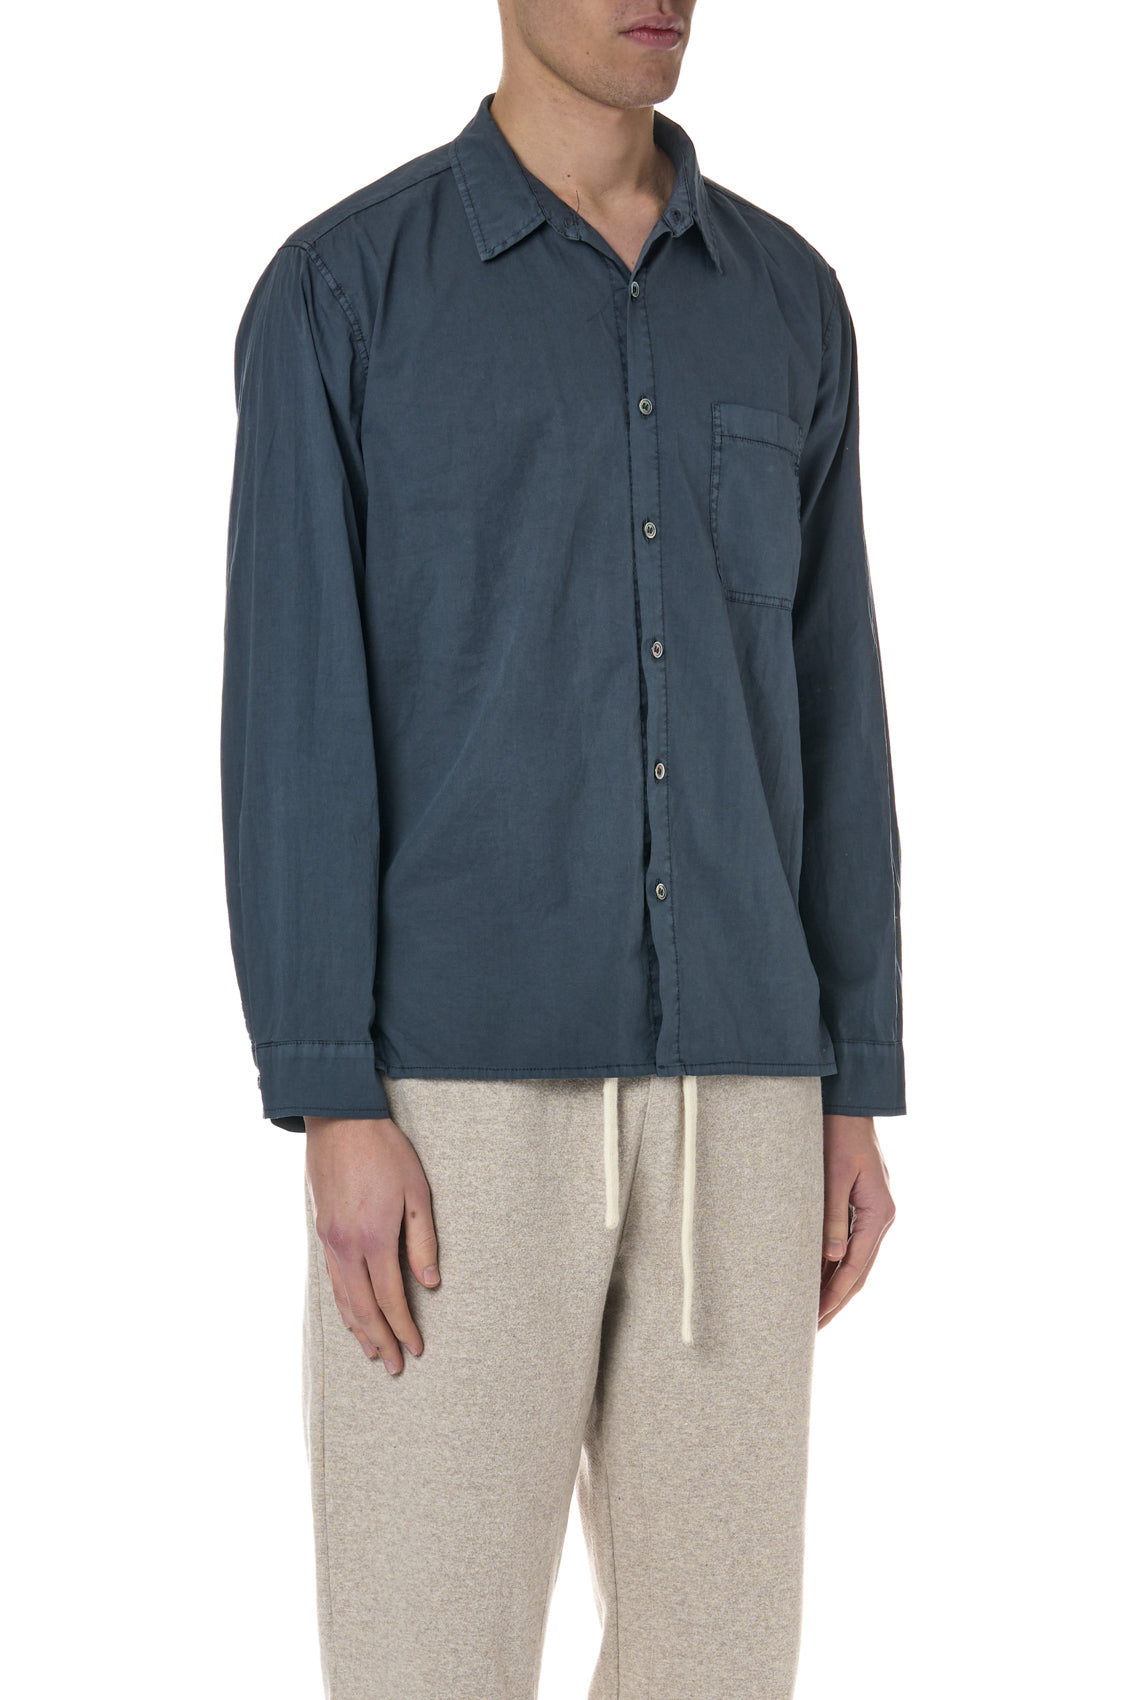 CROSSLEY Sanir pocket shirt in BLUE